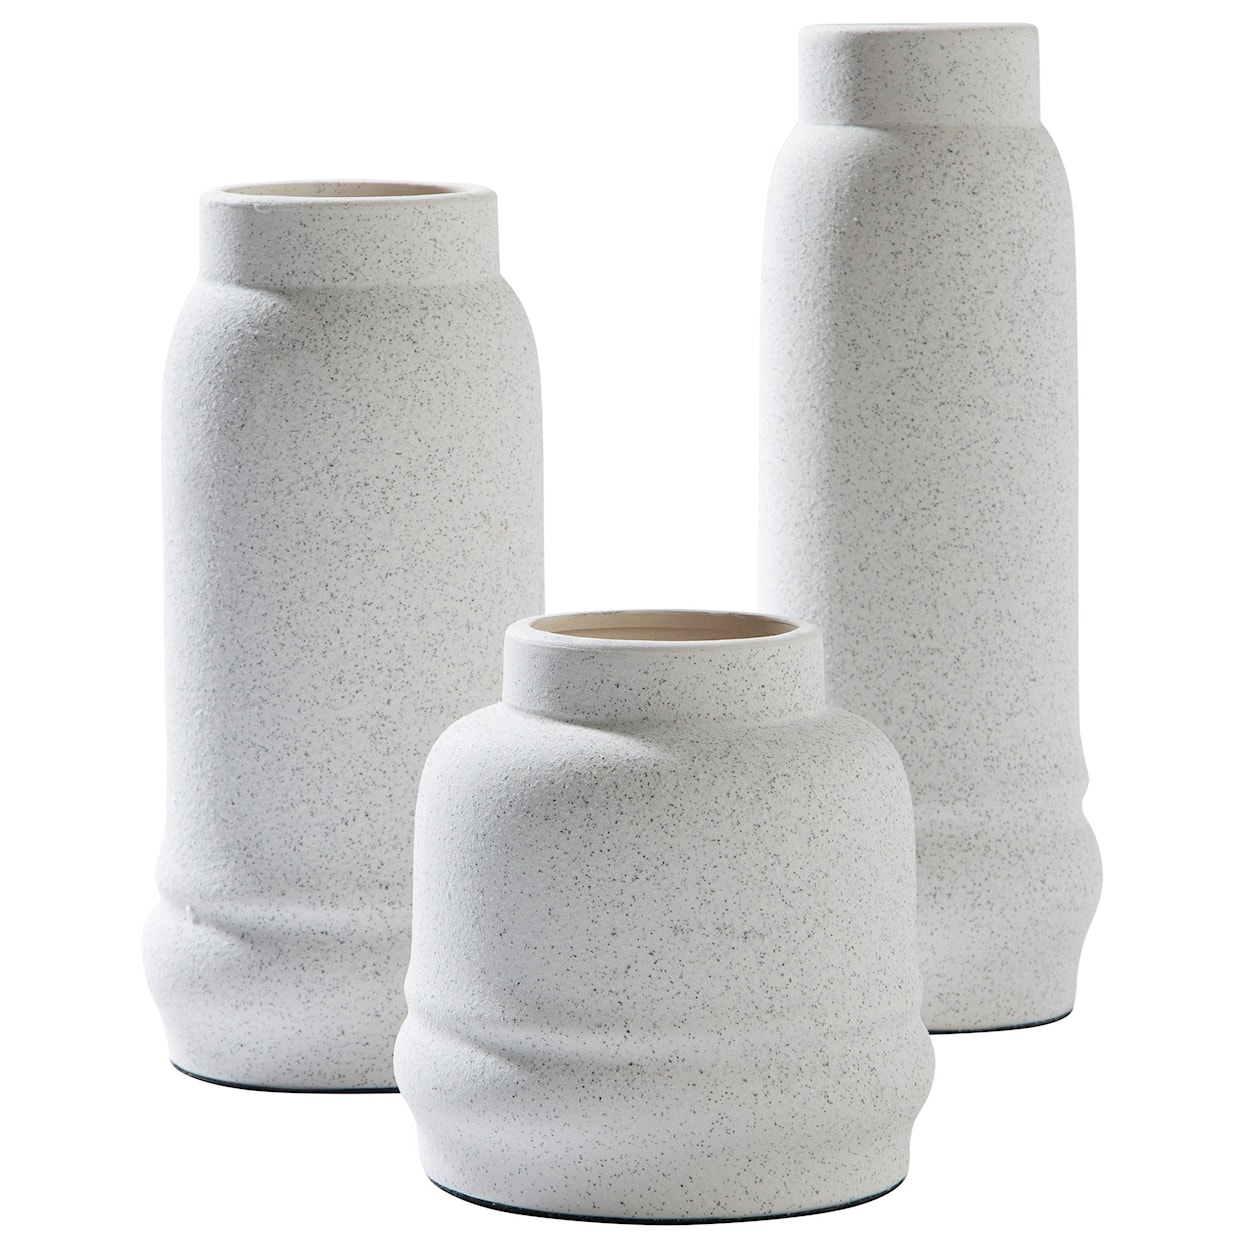 Ashley Furniture Signature Design Accents Jayden Vase (Set of 3)